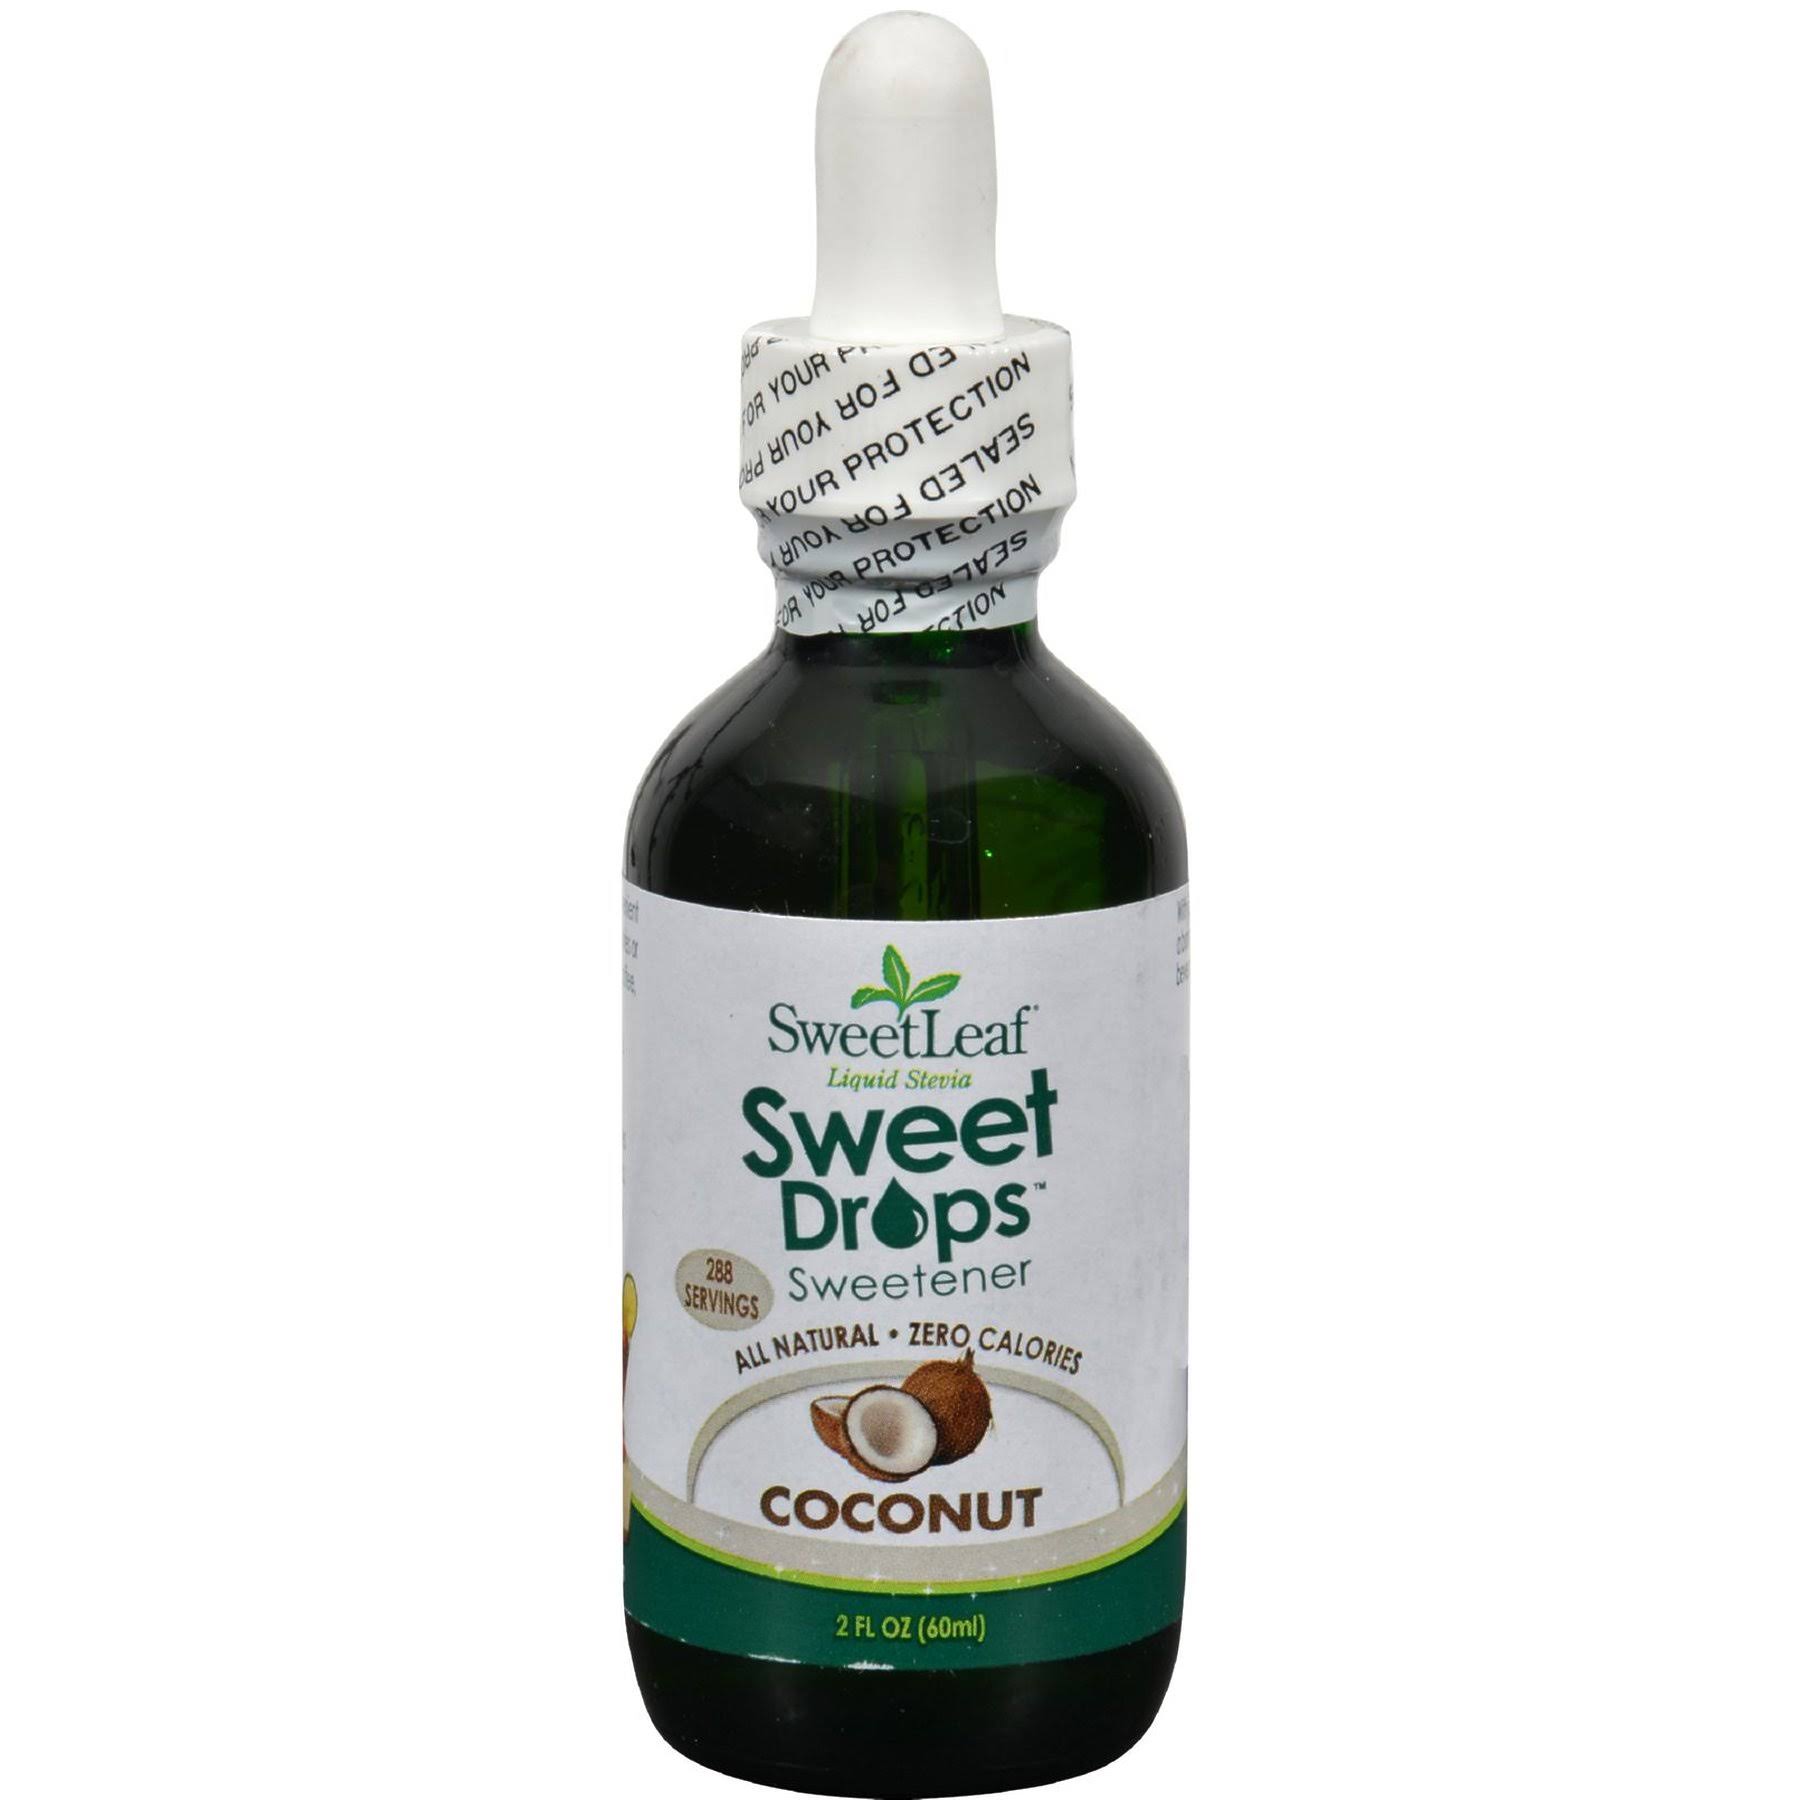 Sweet Leaf Liquid Stevia - Coconut, 2oz